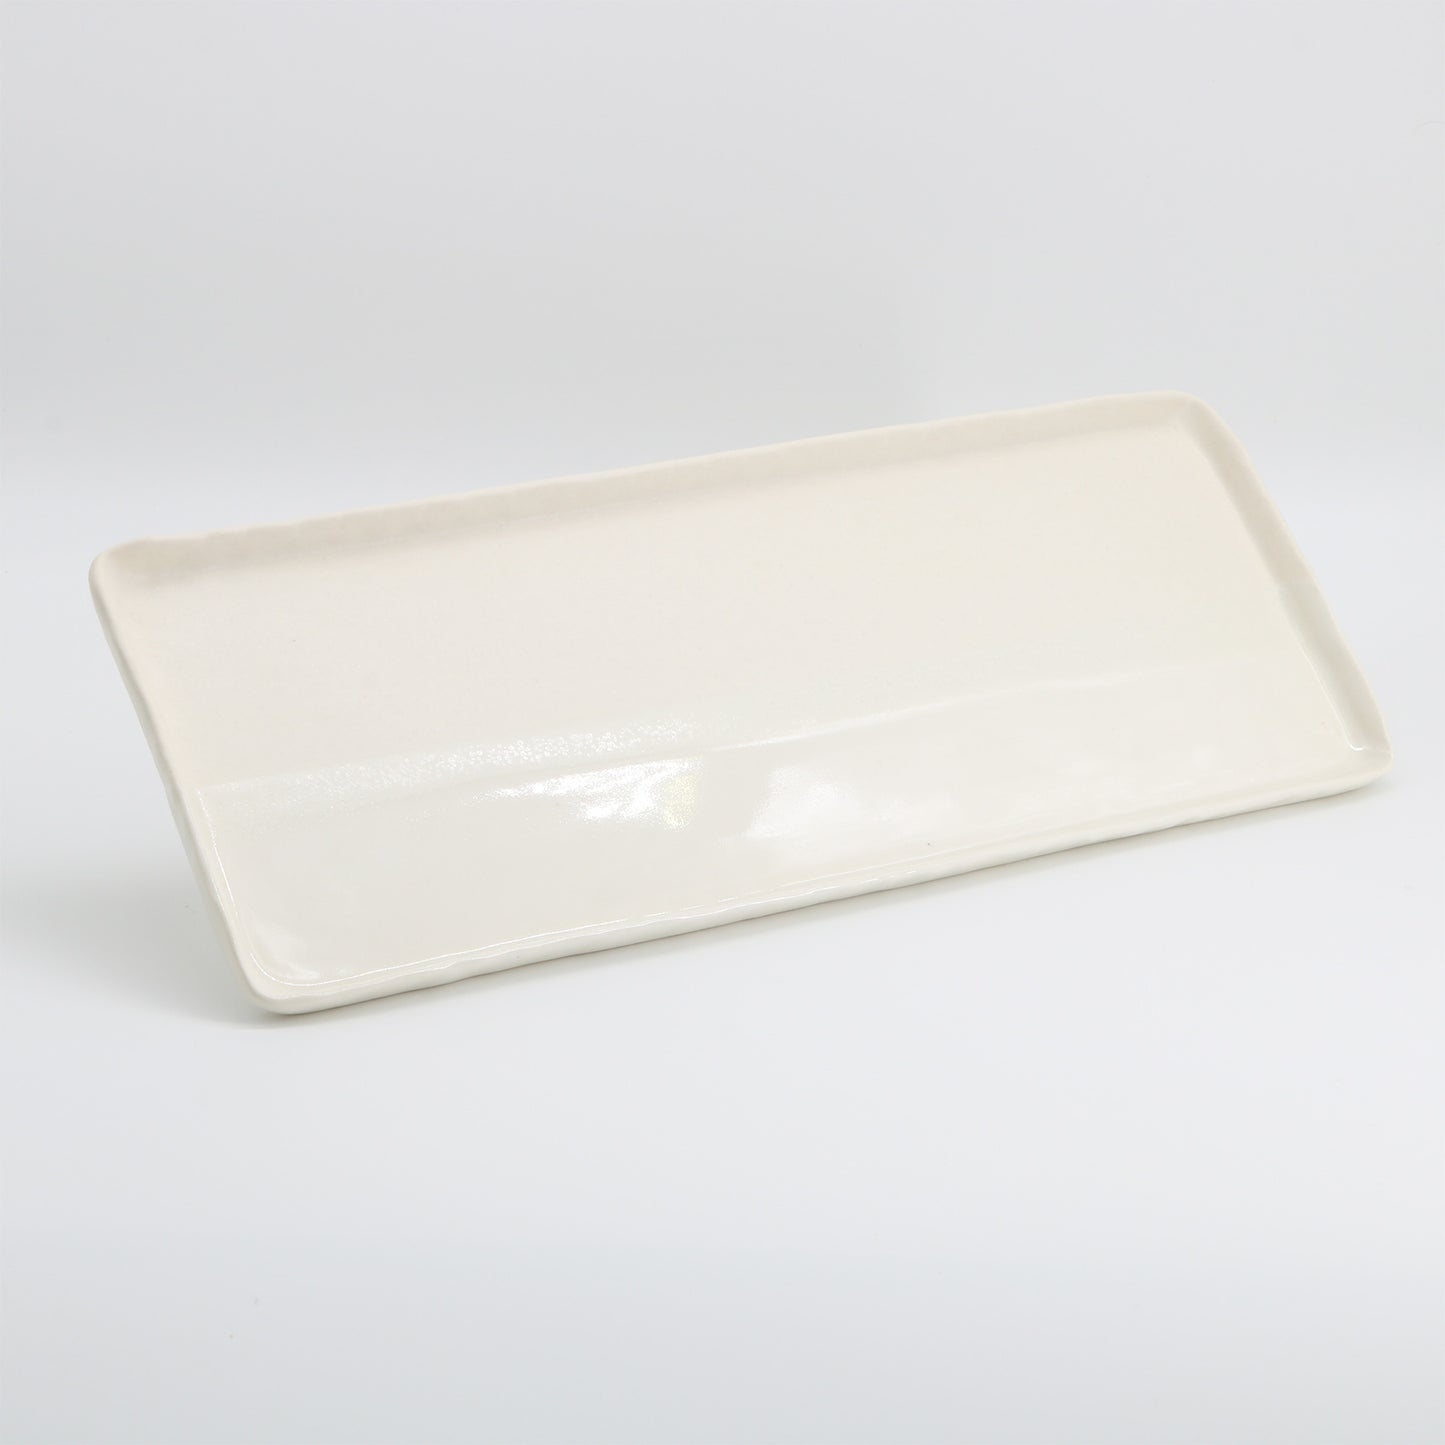 Large rectangular plate